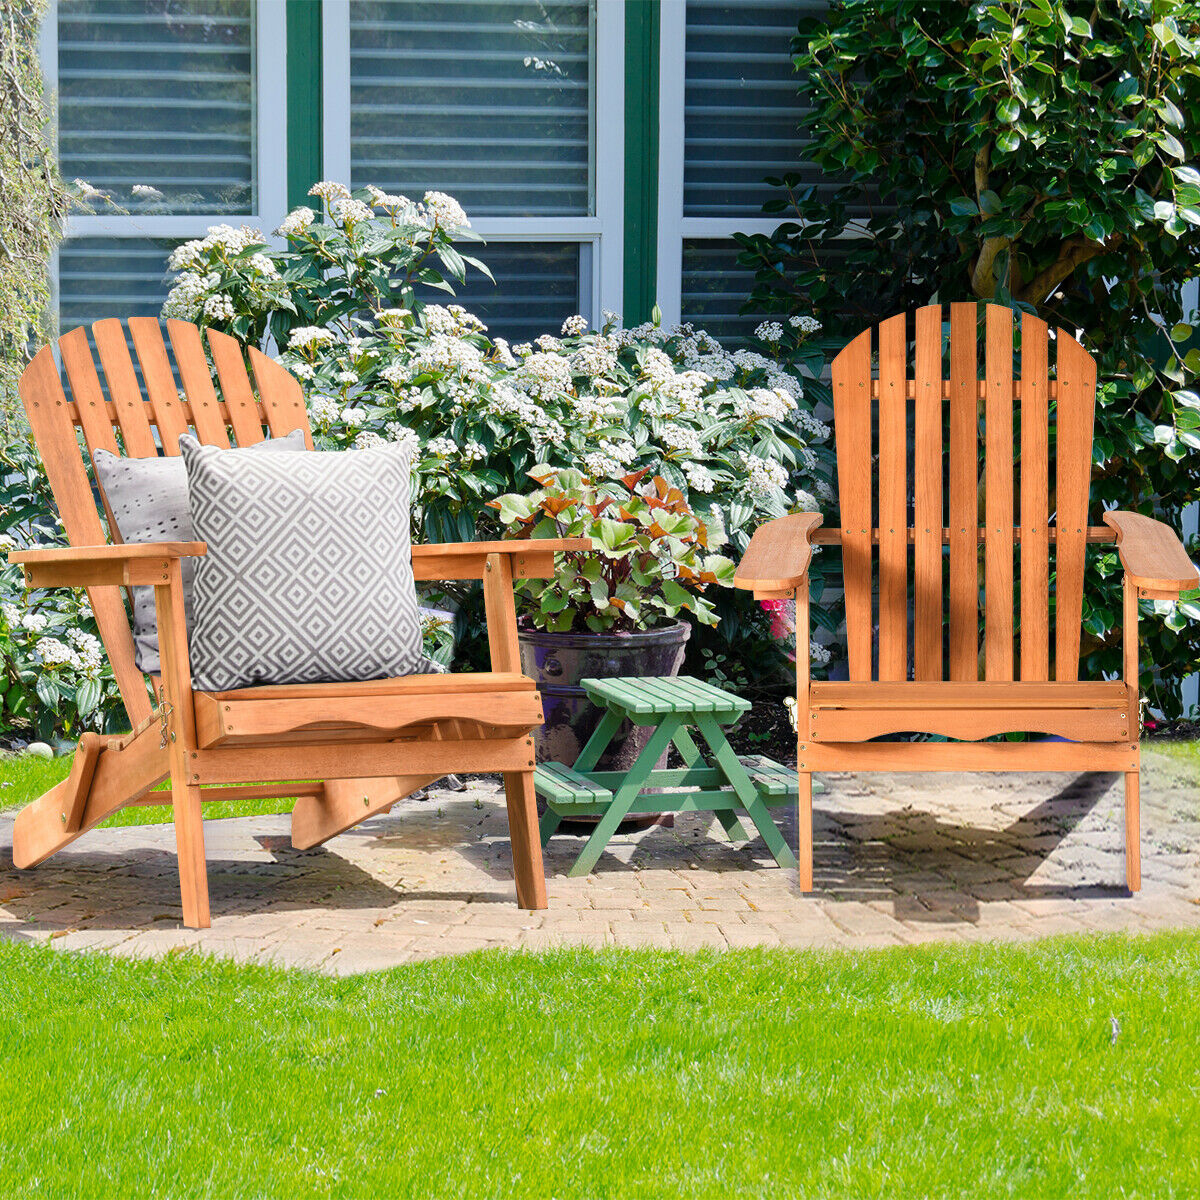 2 PCS Eucalyptus Adirondack Chair Foldable Outdoor Wood Lounger Chair Natural